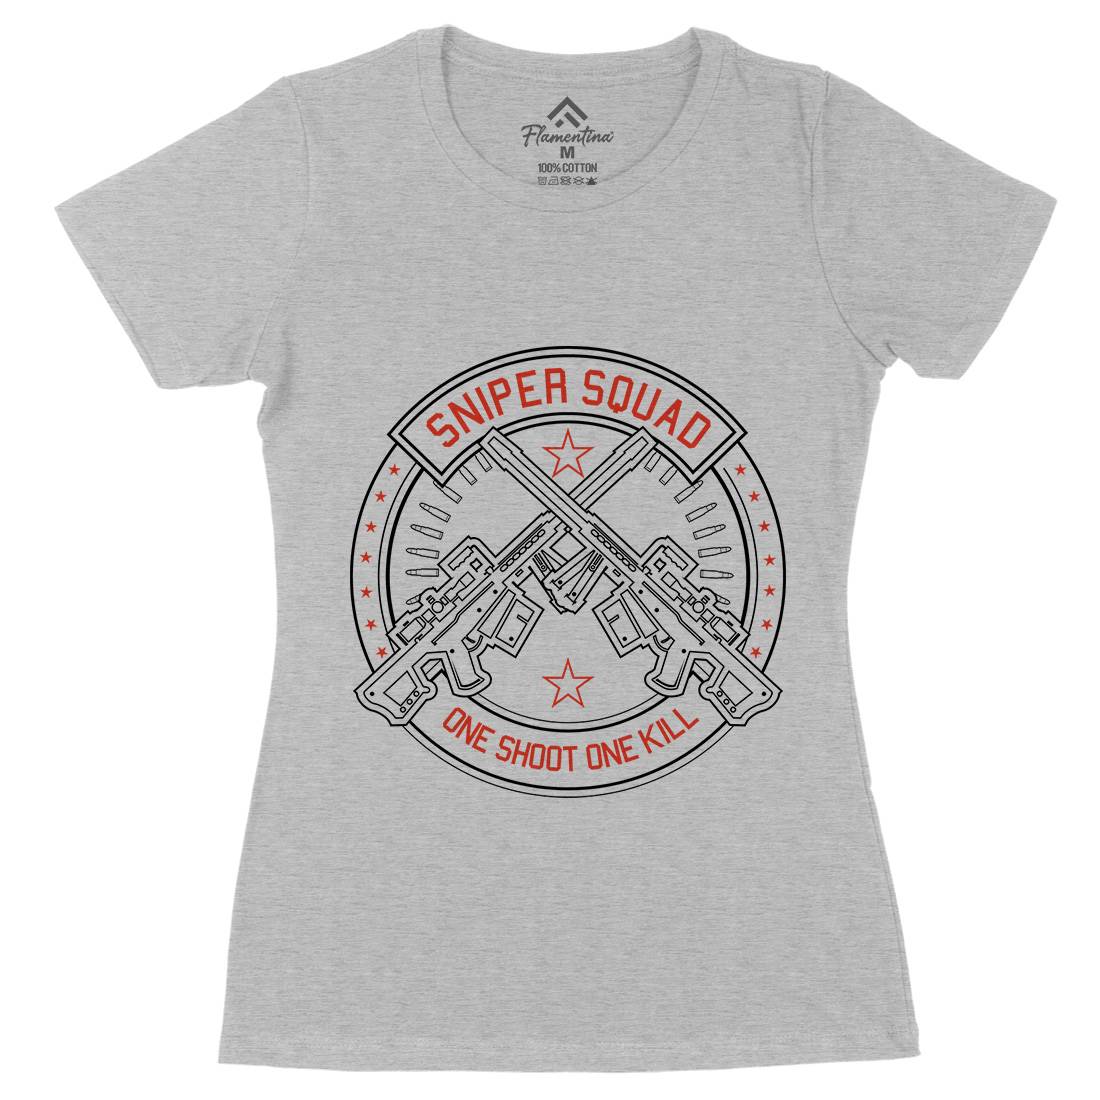 Sniper Squad Womens Organic Crew Neck T-Shirt Army A279